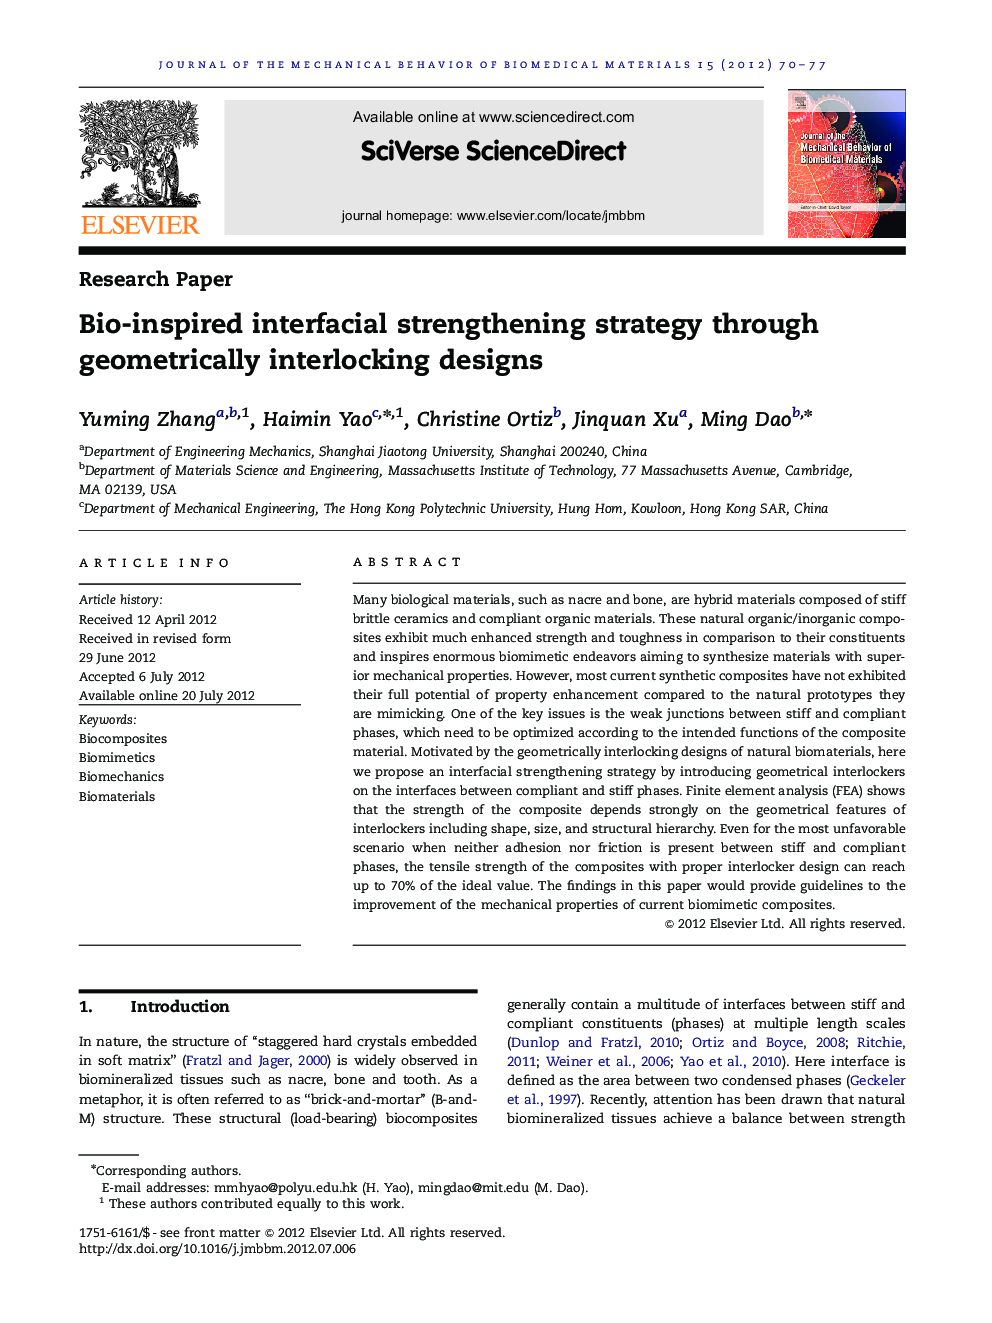 Bio-inspired interfacial strengthening strategy through geometrically interlocking designs